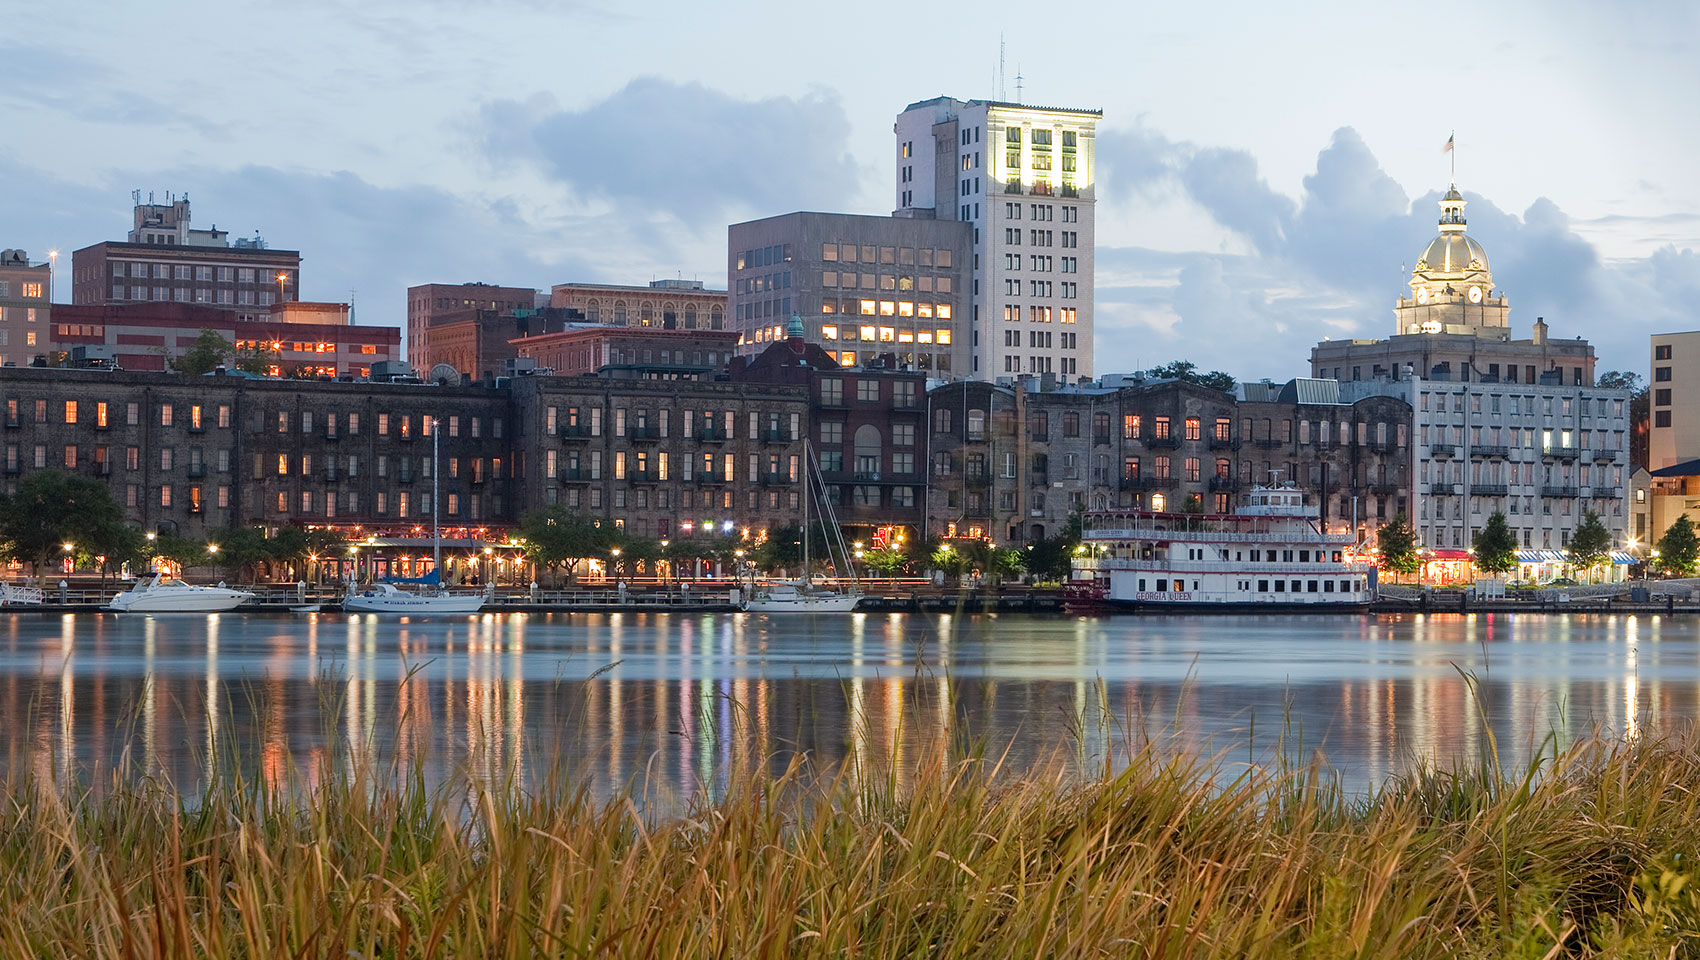 The Brice Hotel Savannah, GA. Image describes the Savannah skyline overlooking Riverwalk.